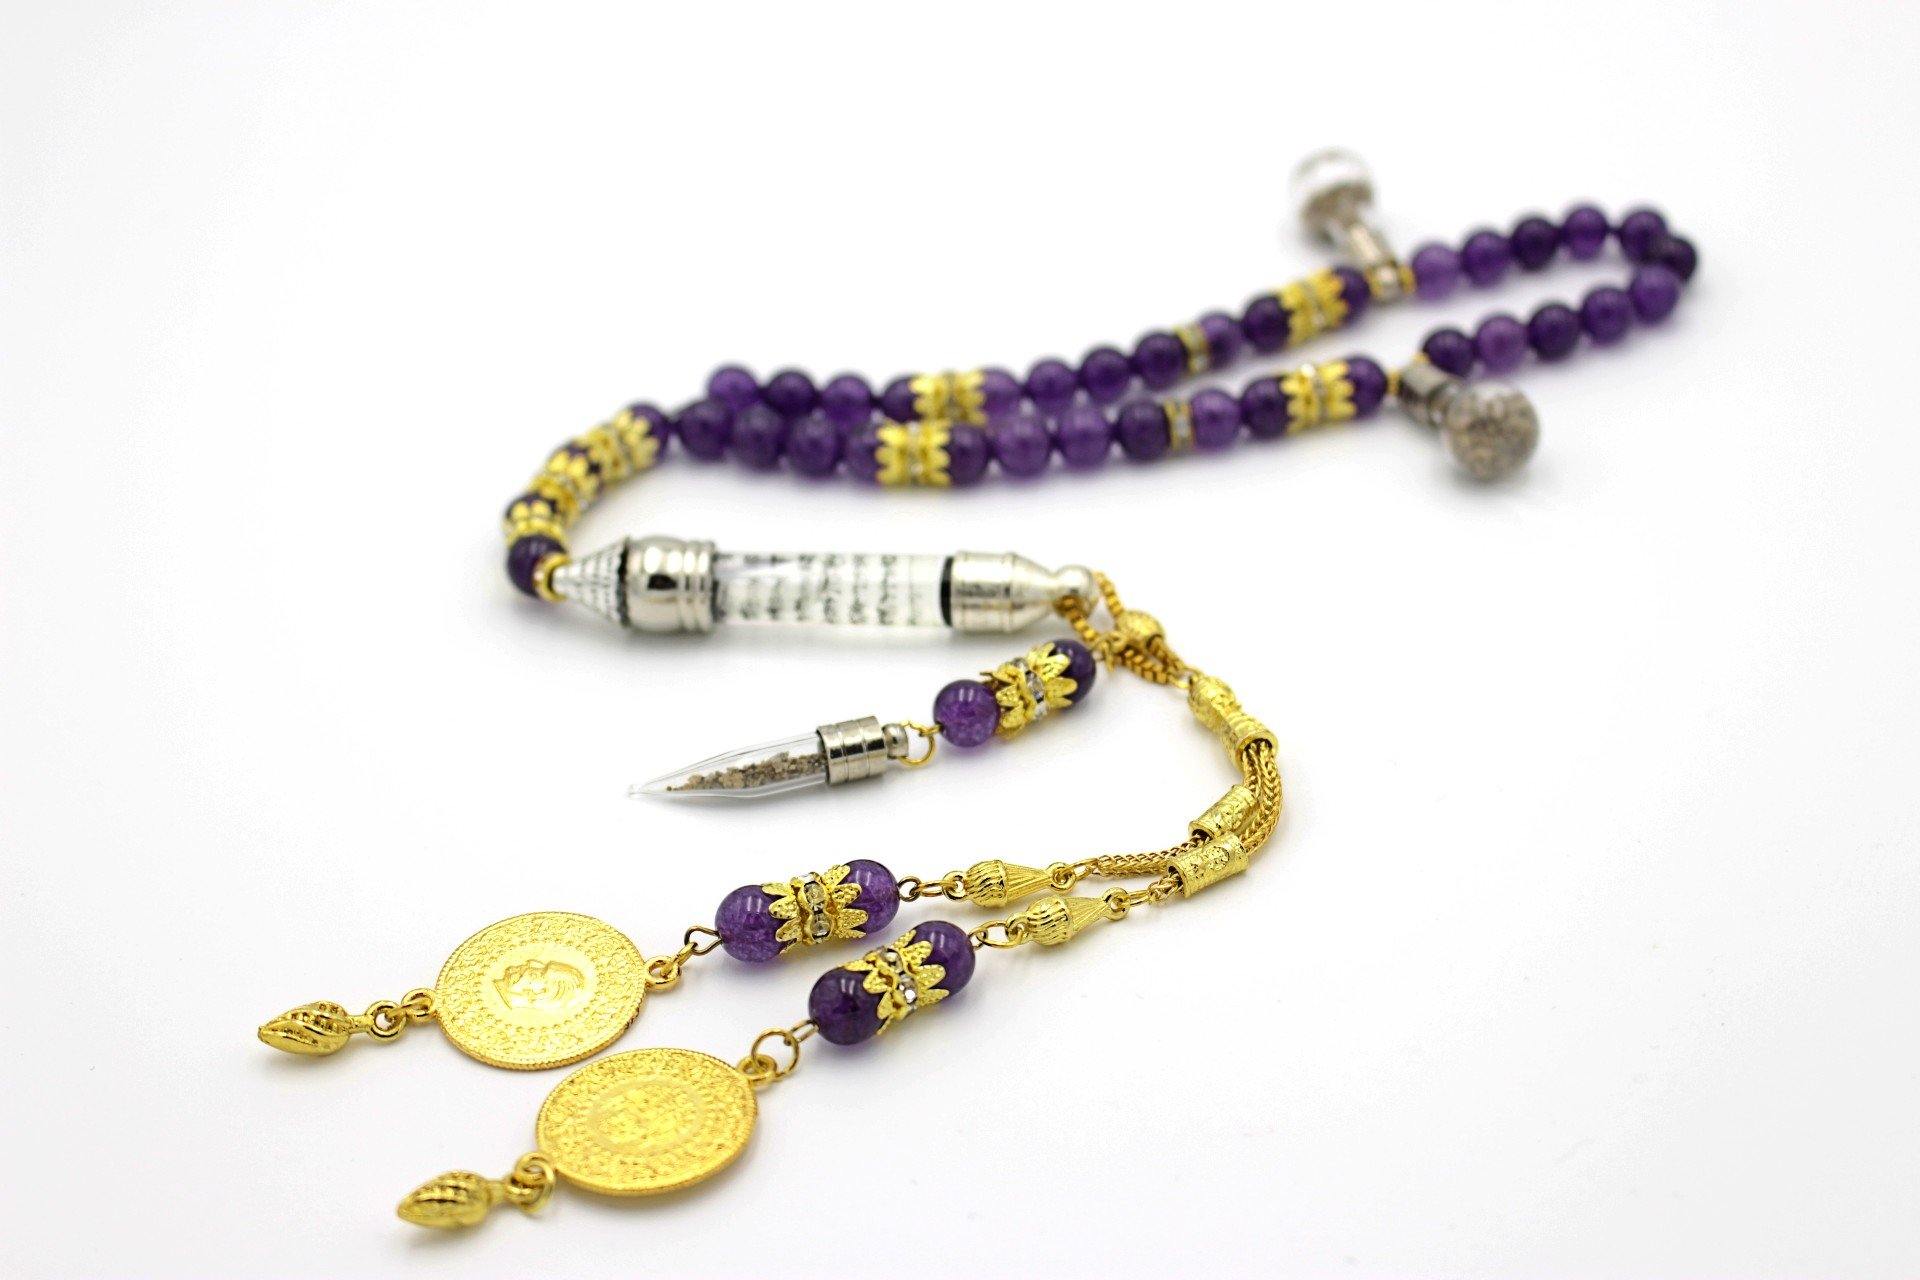 Amethyst prayer beads gemstones tesbih tasbeeh mala luxury jewellery silver